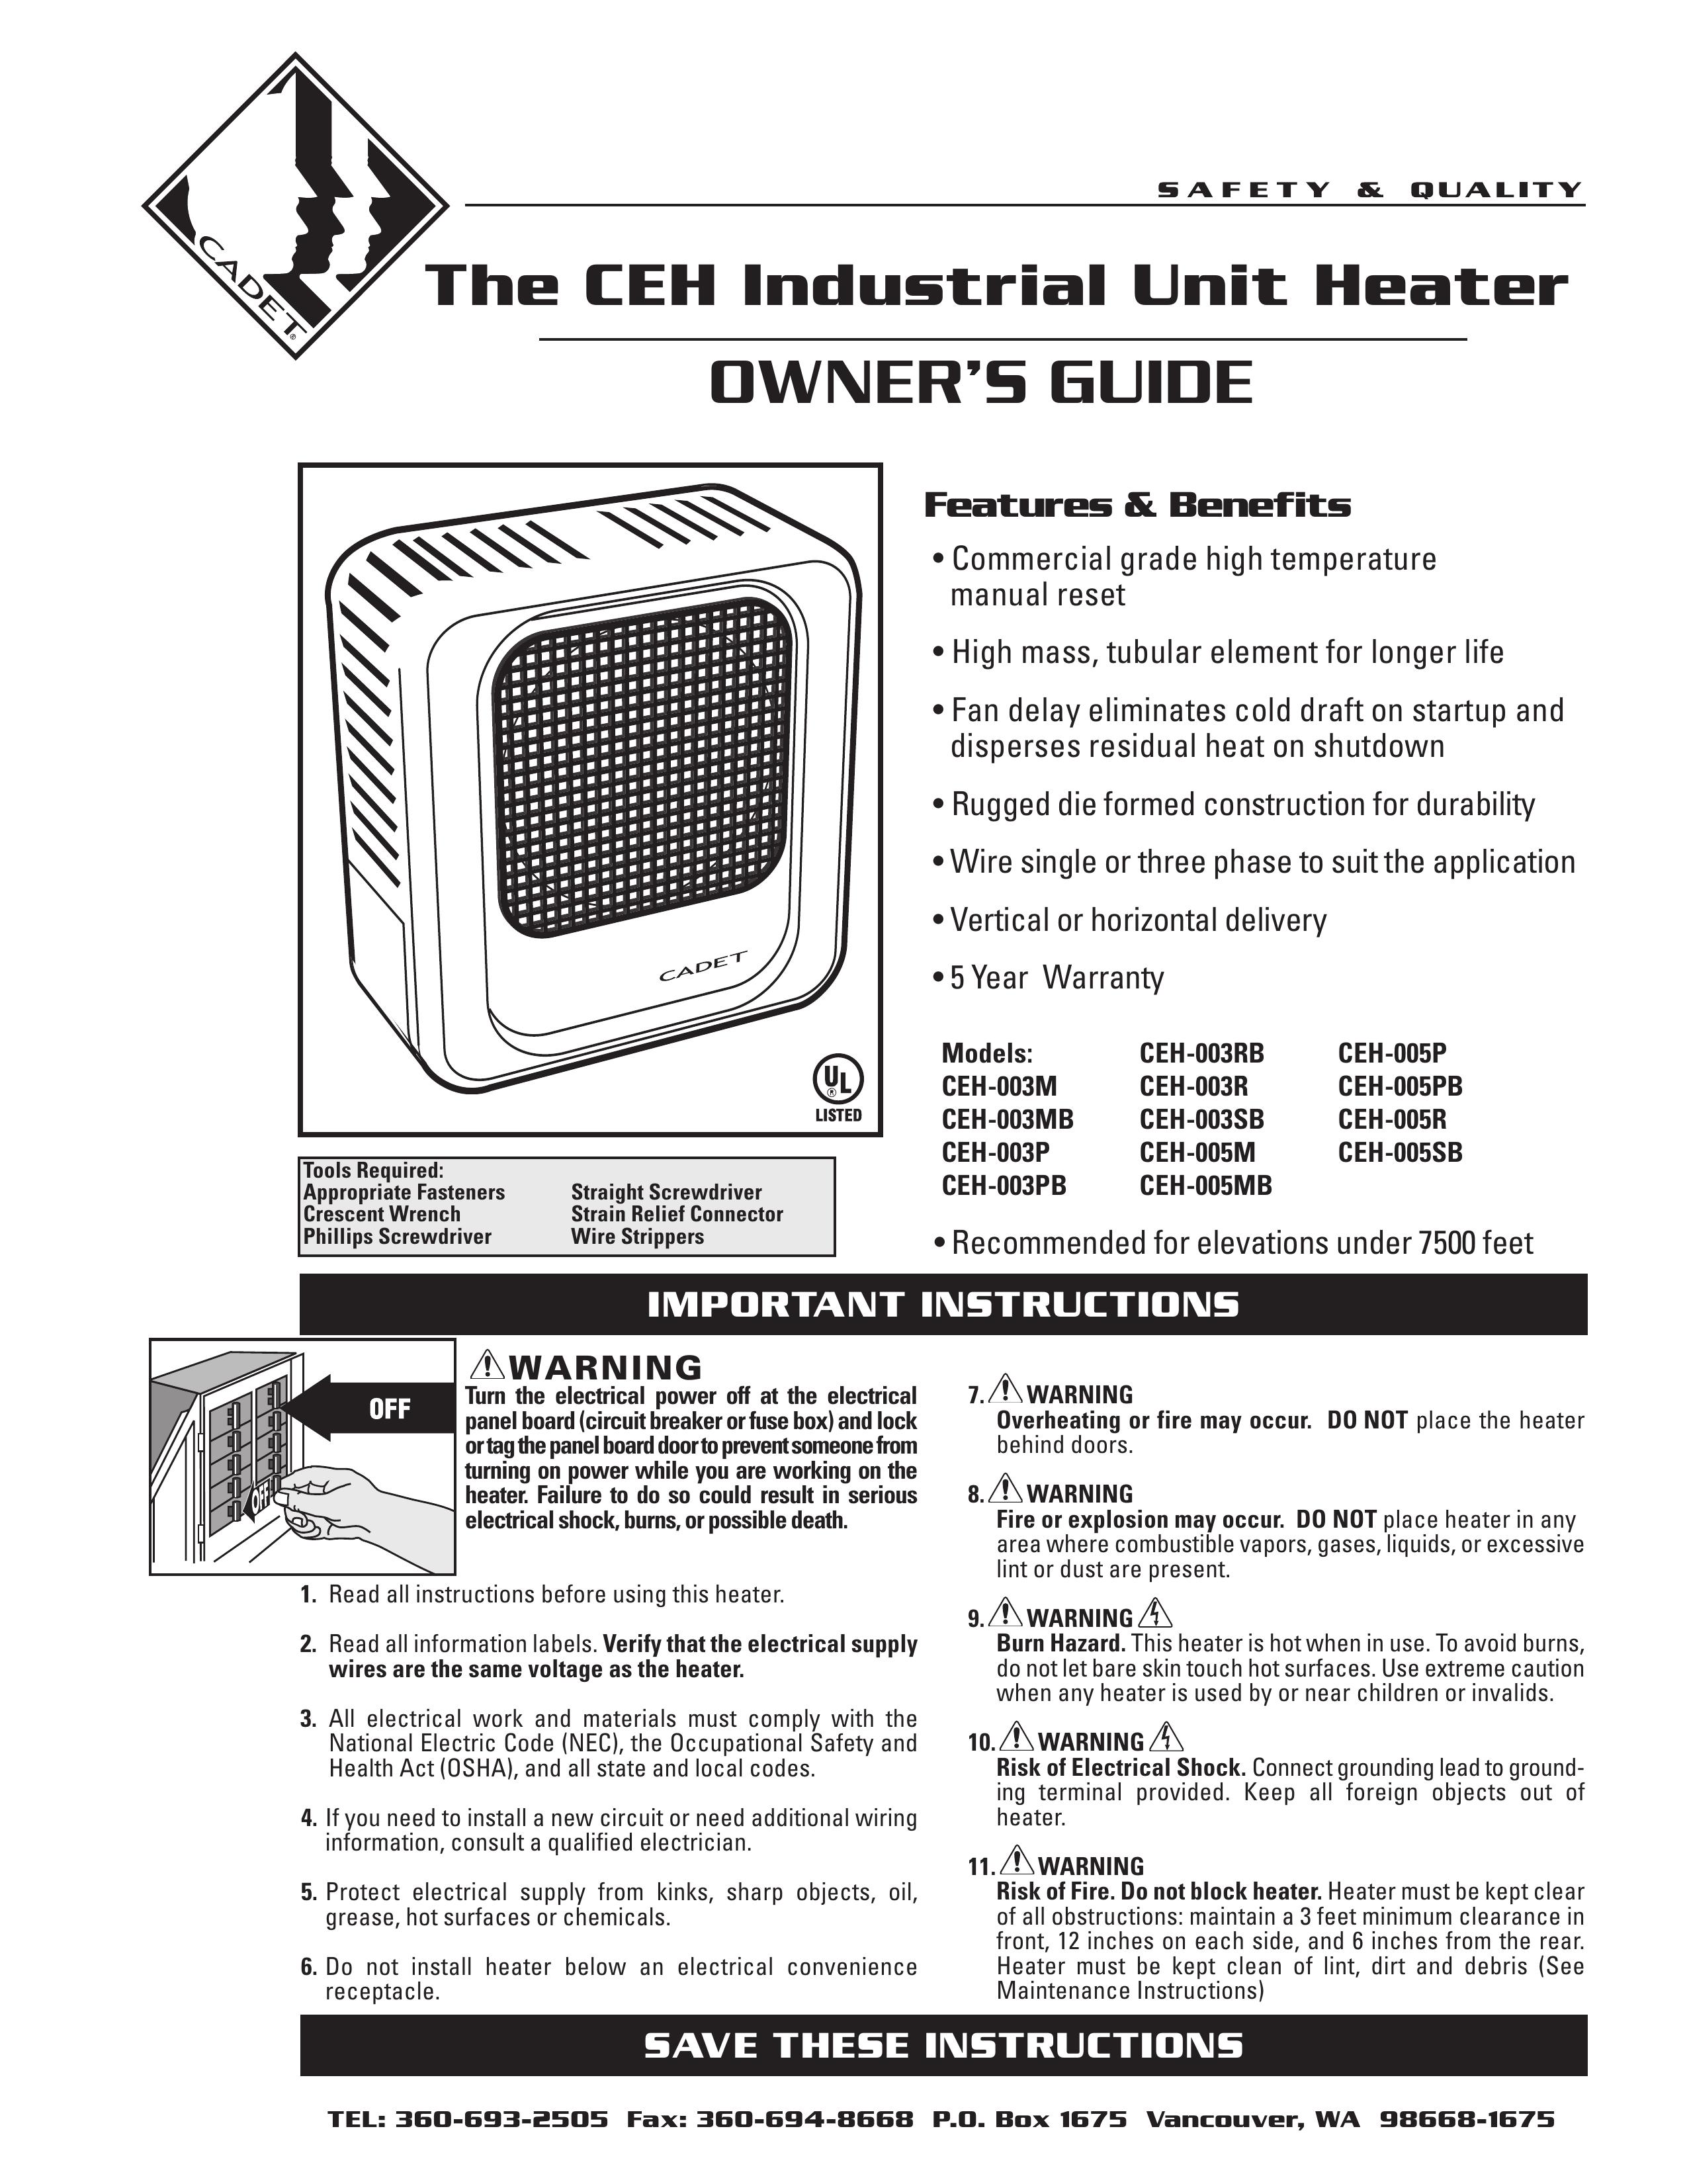 Cadet CEH-005SB Patio Heater User Manual